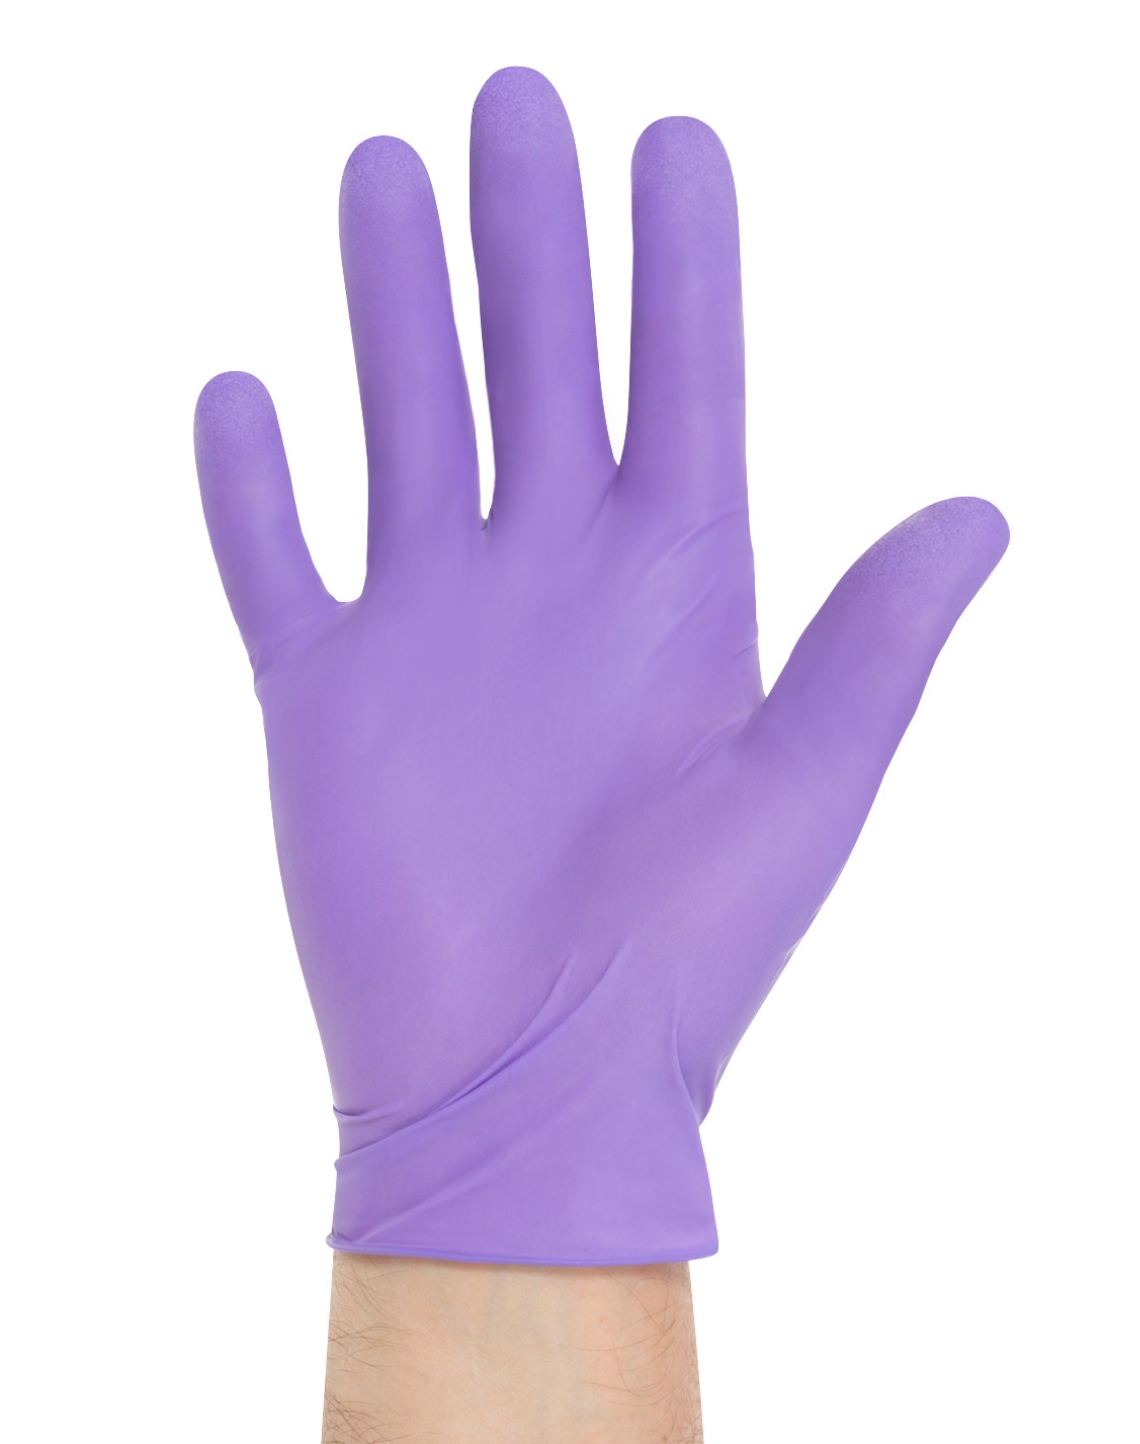 PURPLE Nitrile Gloves, X-Large, Box of 90